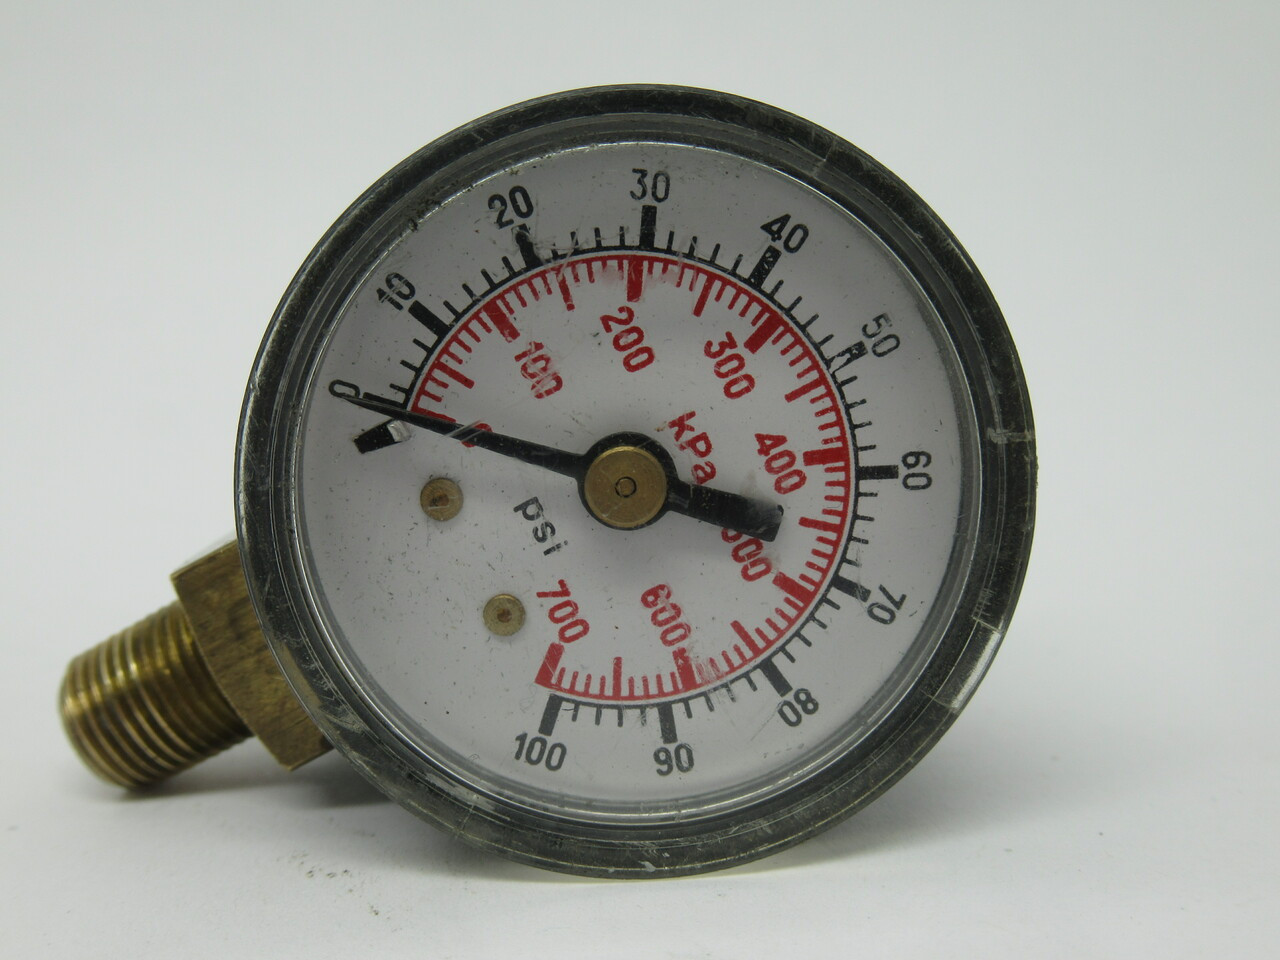 Generic Pressure Gauge 0-700kPa 0-100psi 1-3/4" Dia. M10 Thread Bottom Port USED